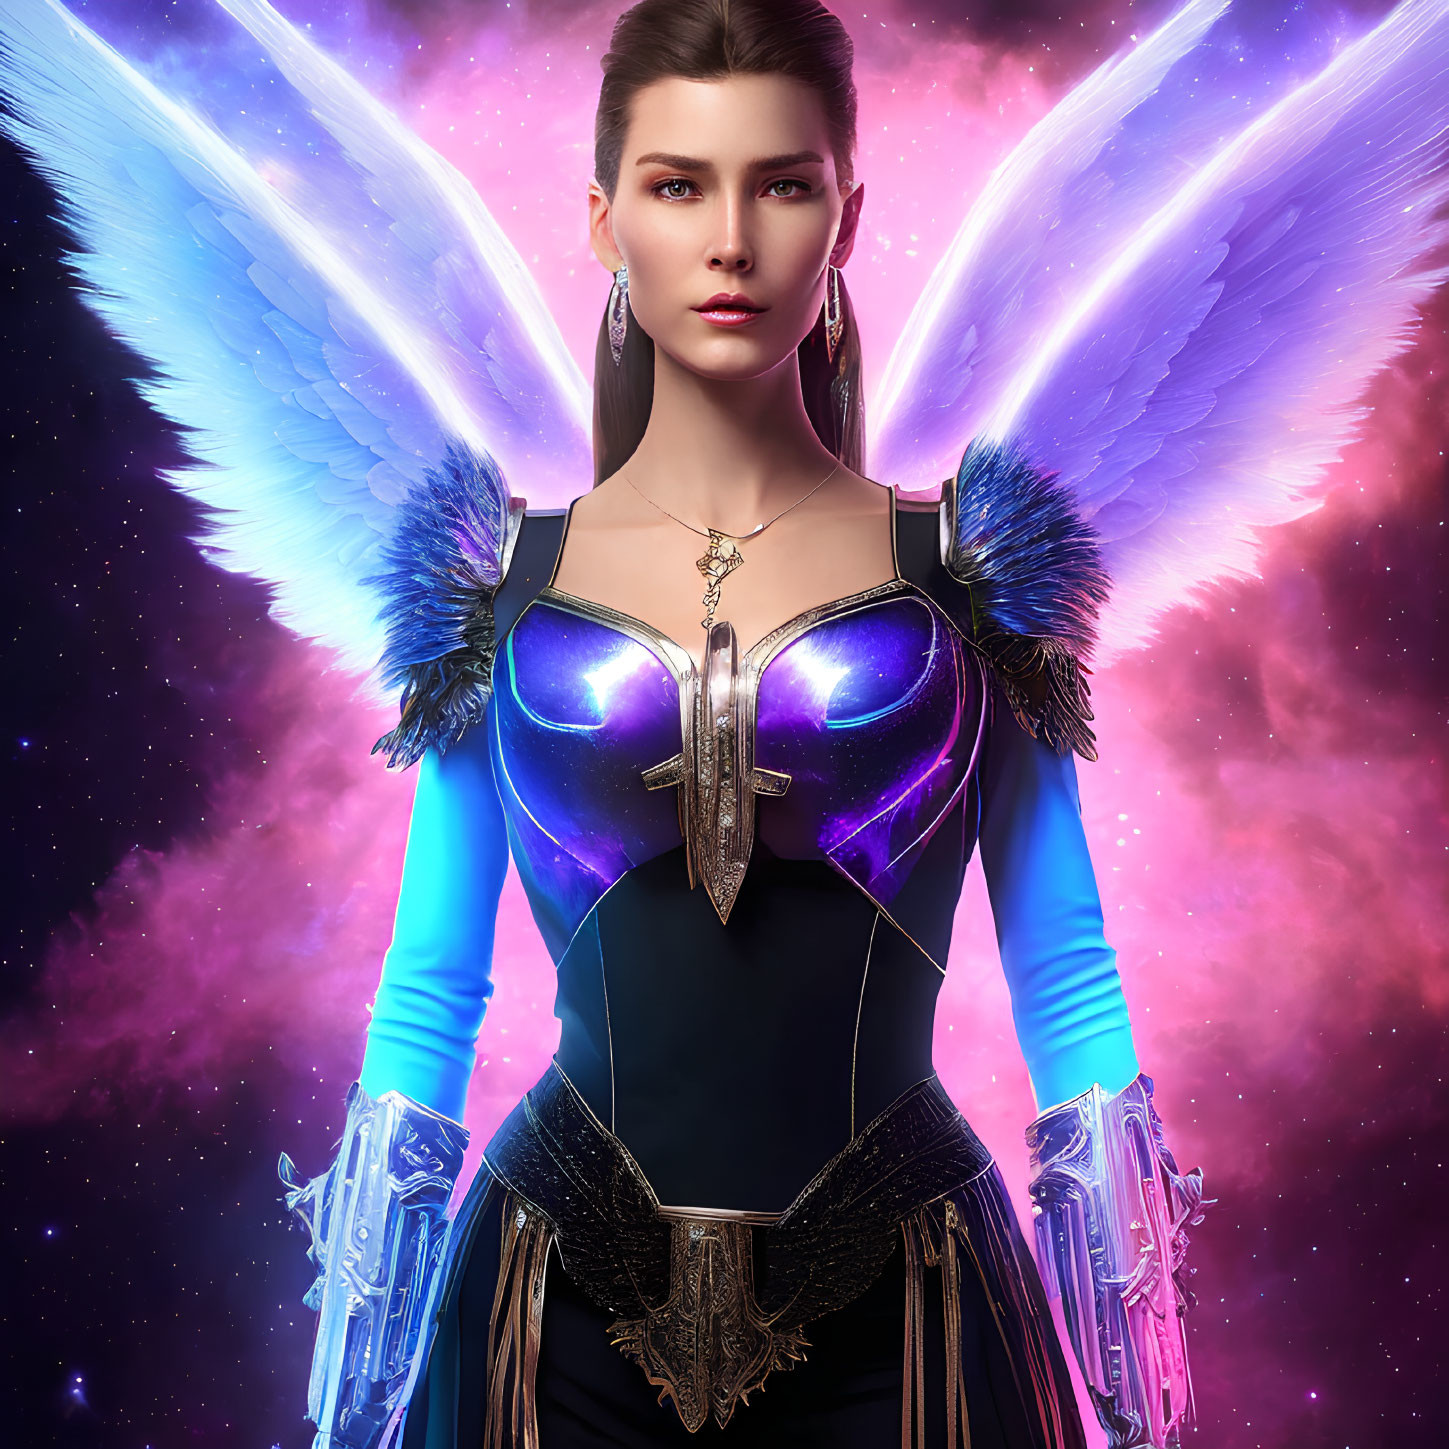 Digital artwork: Woman with pink & blue wings, futuristic armor, cross pendant, in cosmic setting